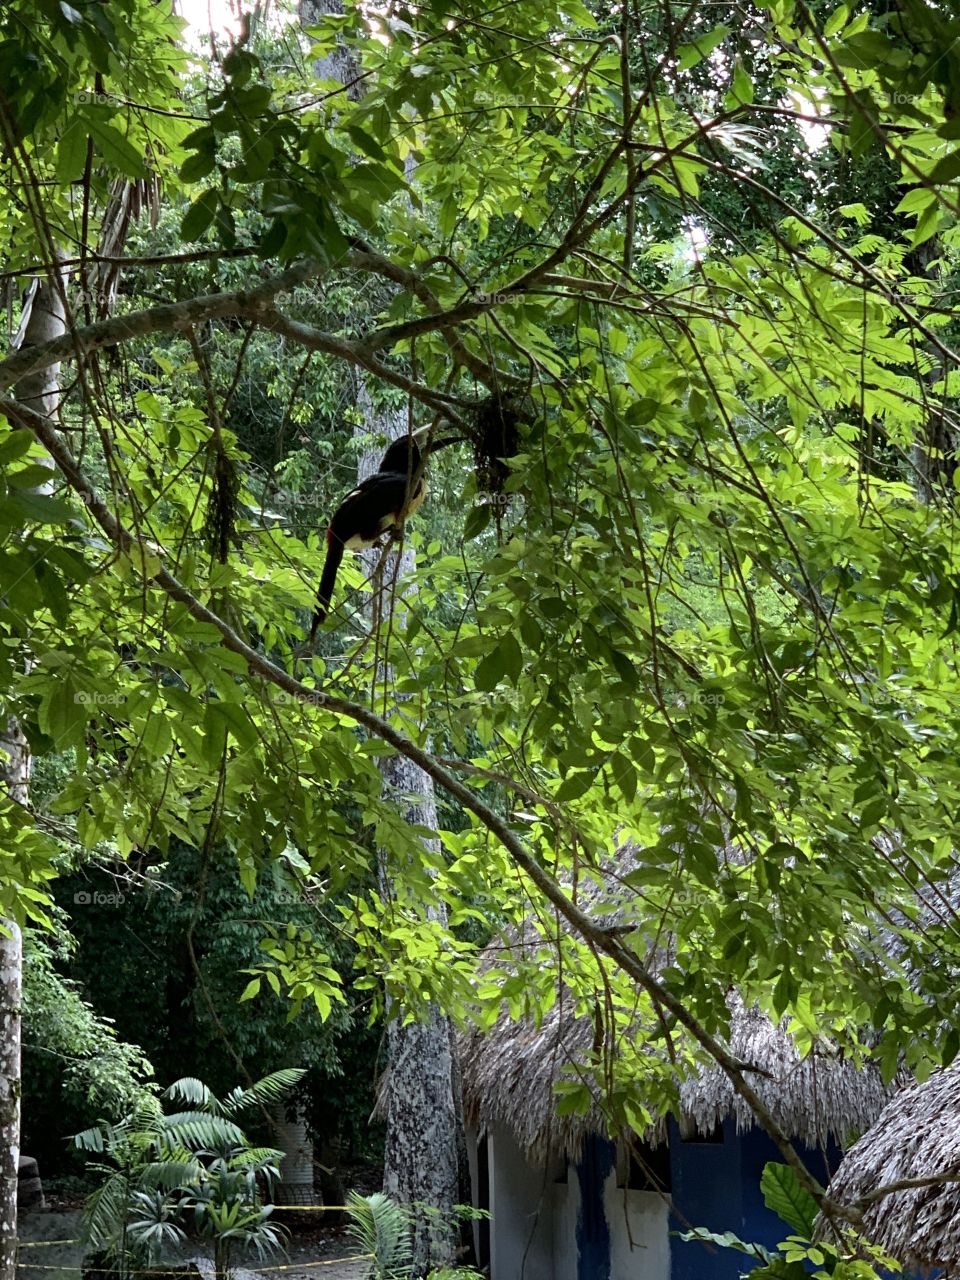 Wild Toucan bird eating from brances 